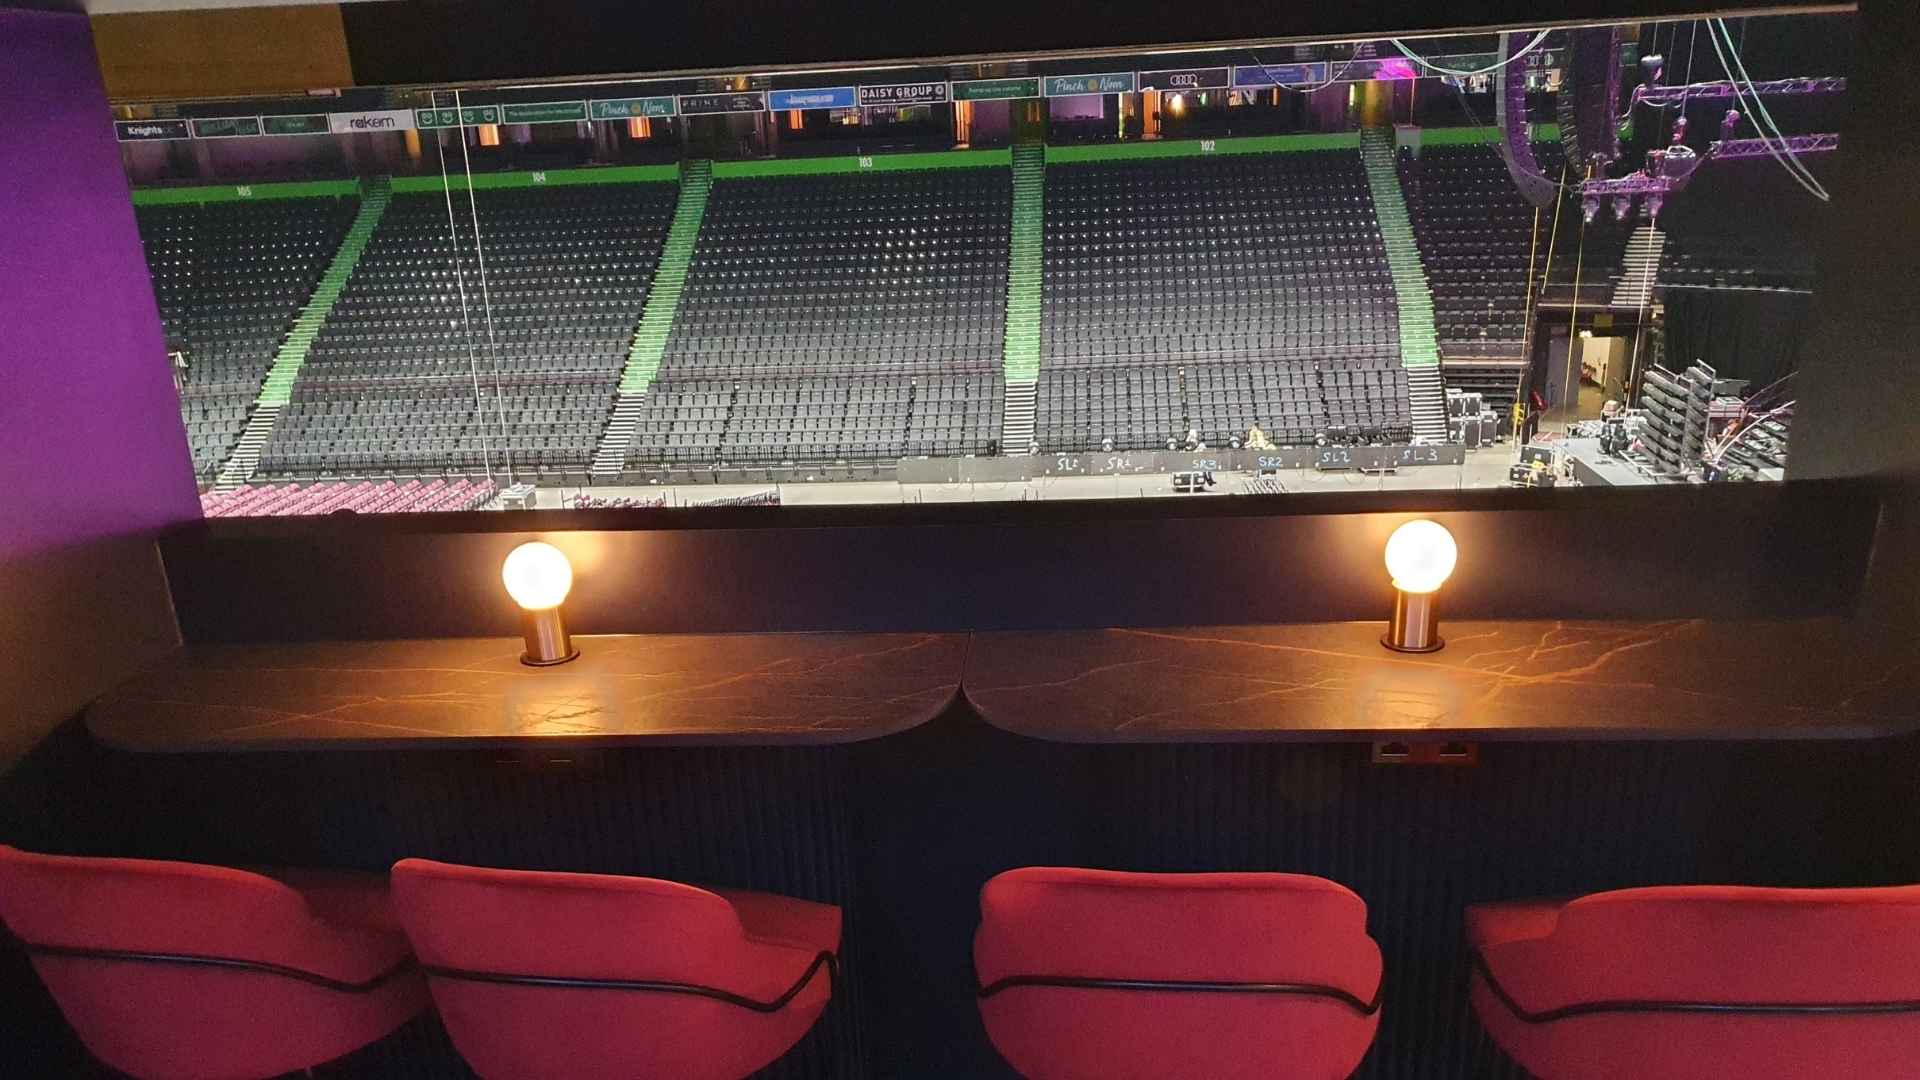 ao arena's executive viewing area bespoke seating